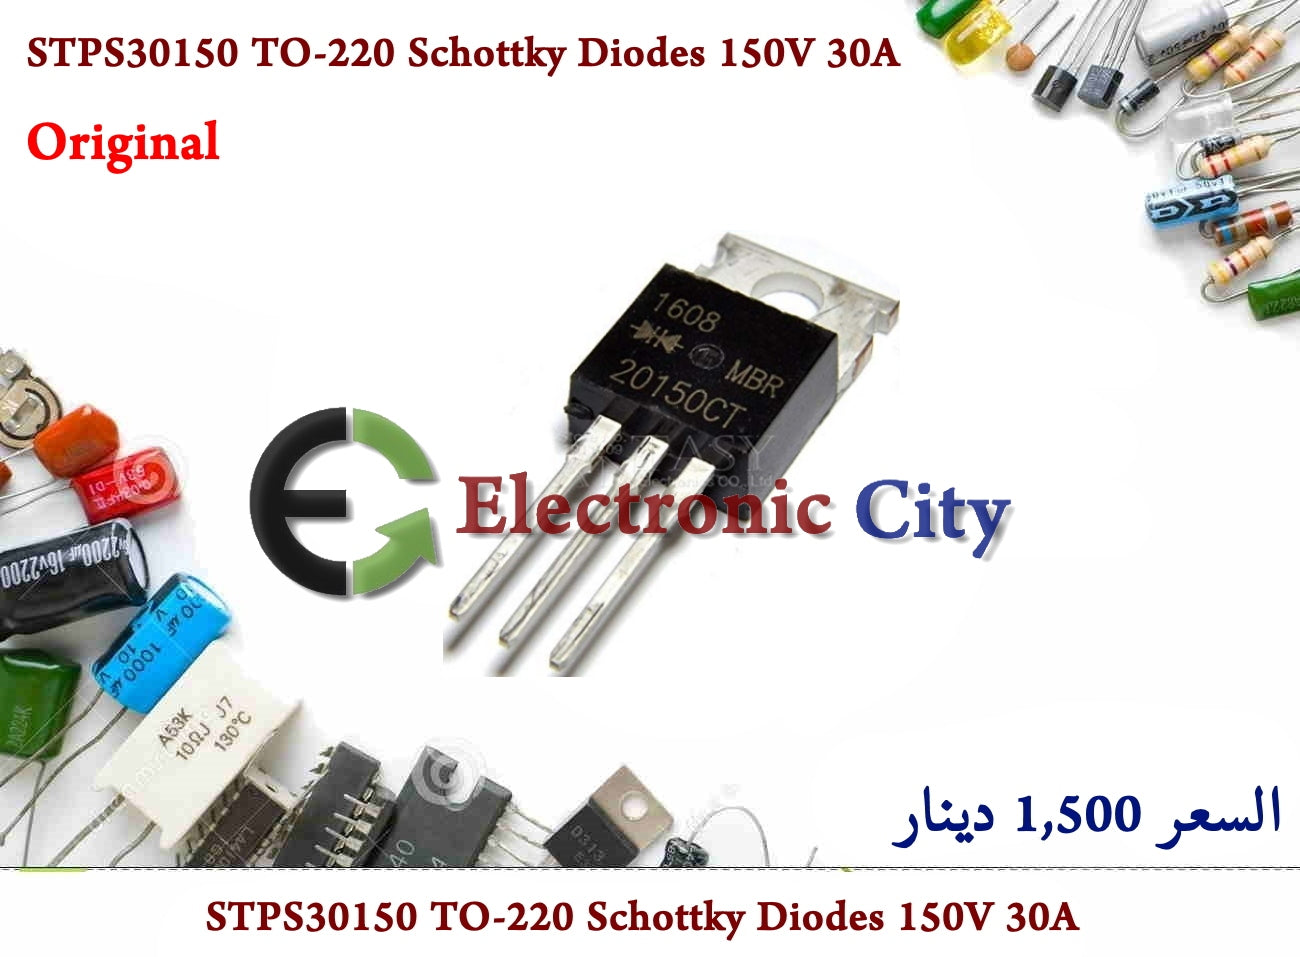 STPS30150 TO-220 Schottky Diodes 150V 30A